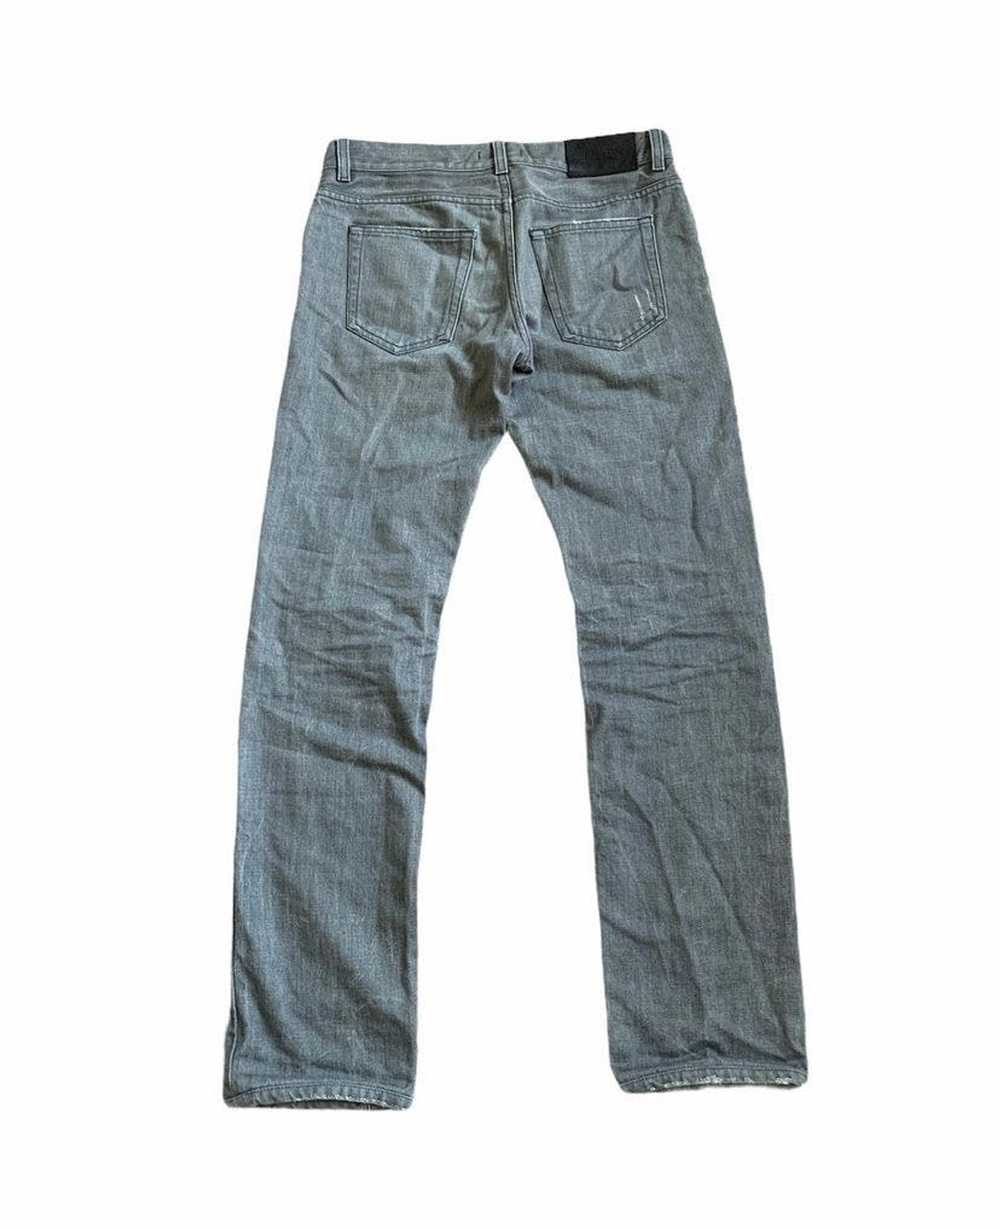 Prada Prada Milano Denim Jeans - image 2